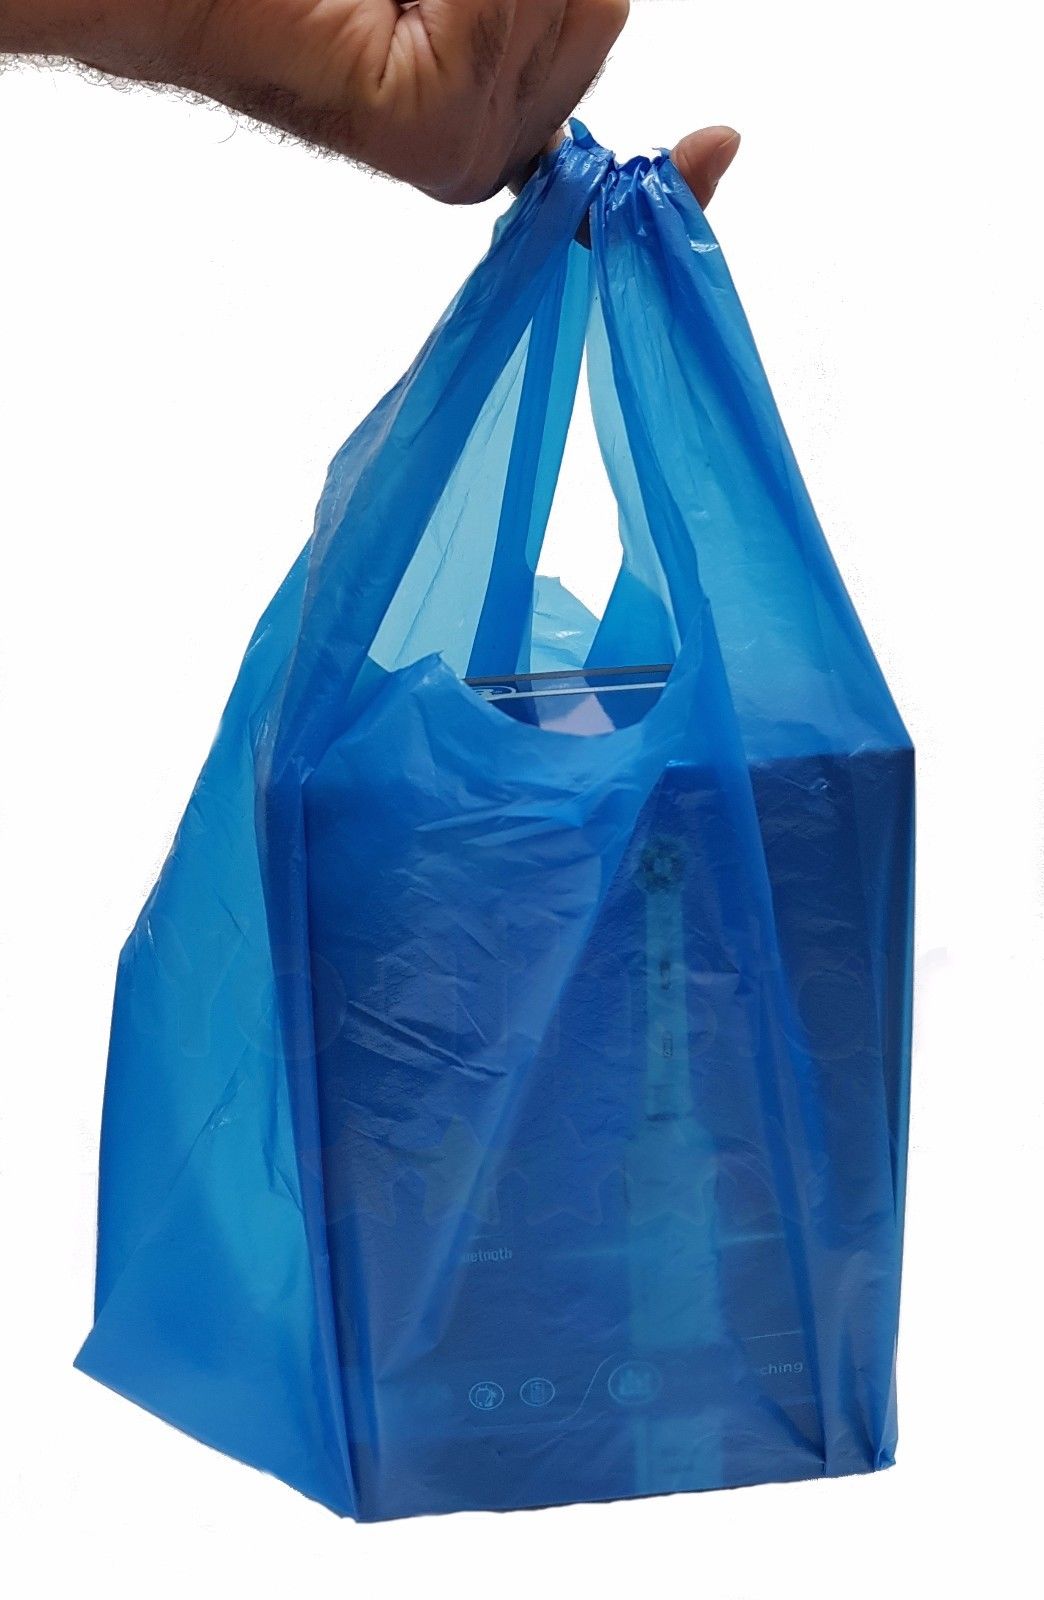 An immediate plastic bag ban is possible - VnExpress International